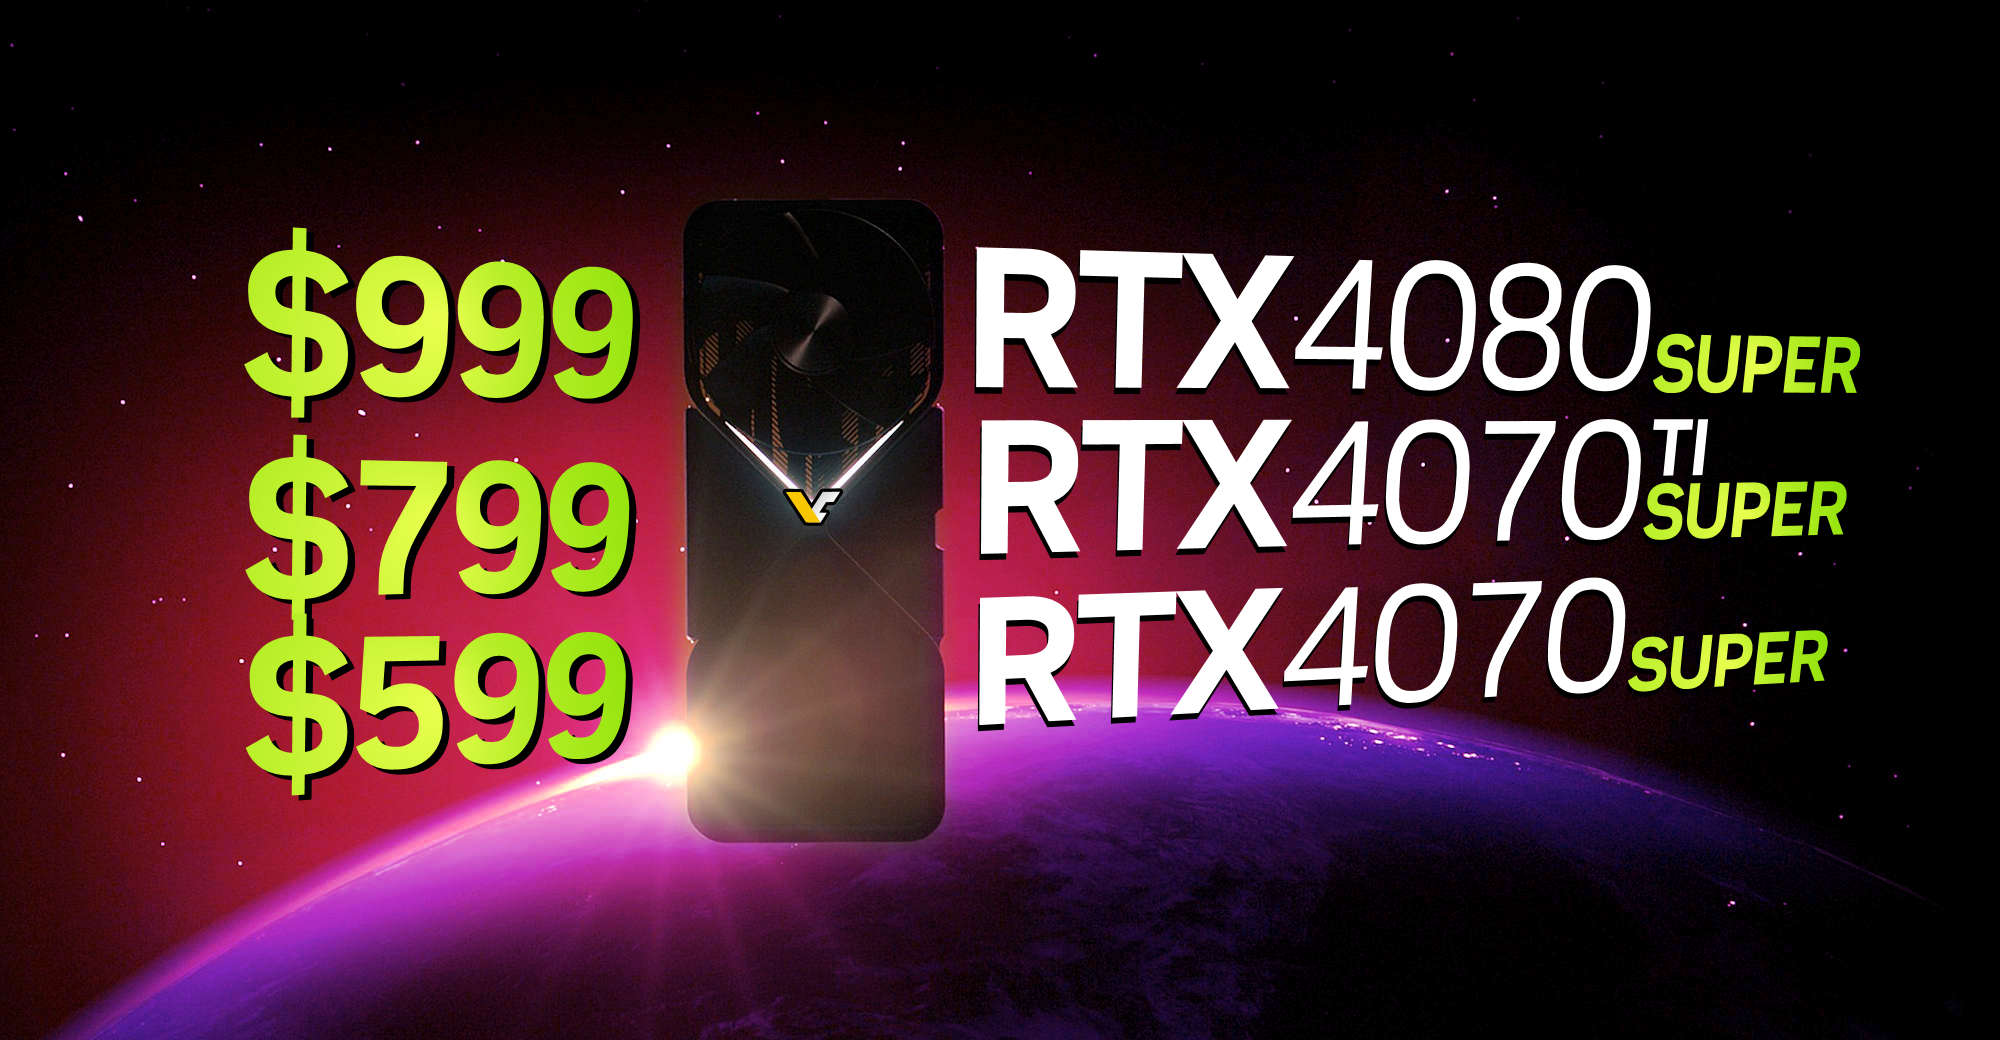 NVIDIA RTX 4080 SUPER の価格は 999 ドル、RTX 4070 Ti/4070 SUPER は 799 ドル/599 ドルであると伝えられています